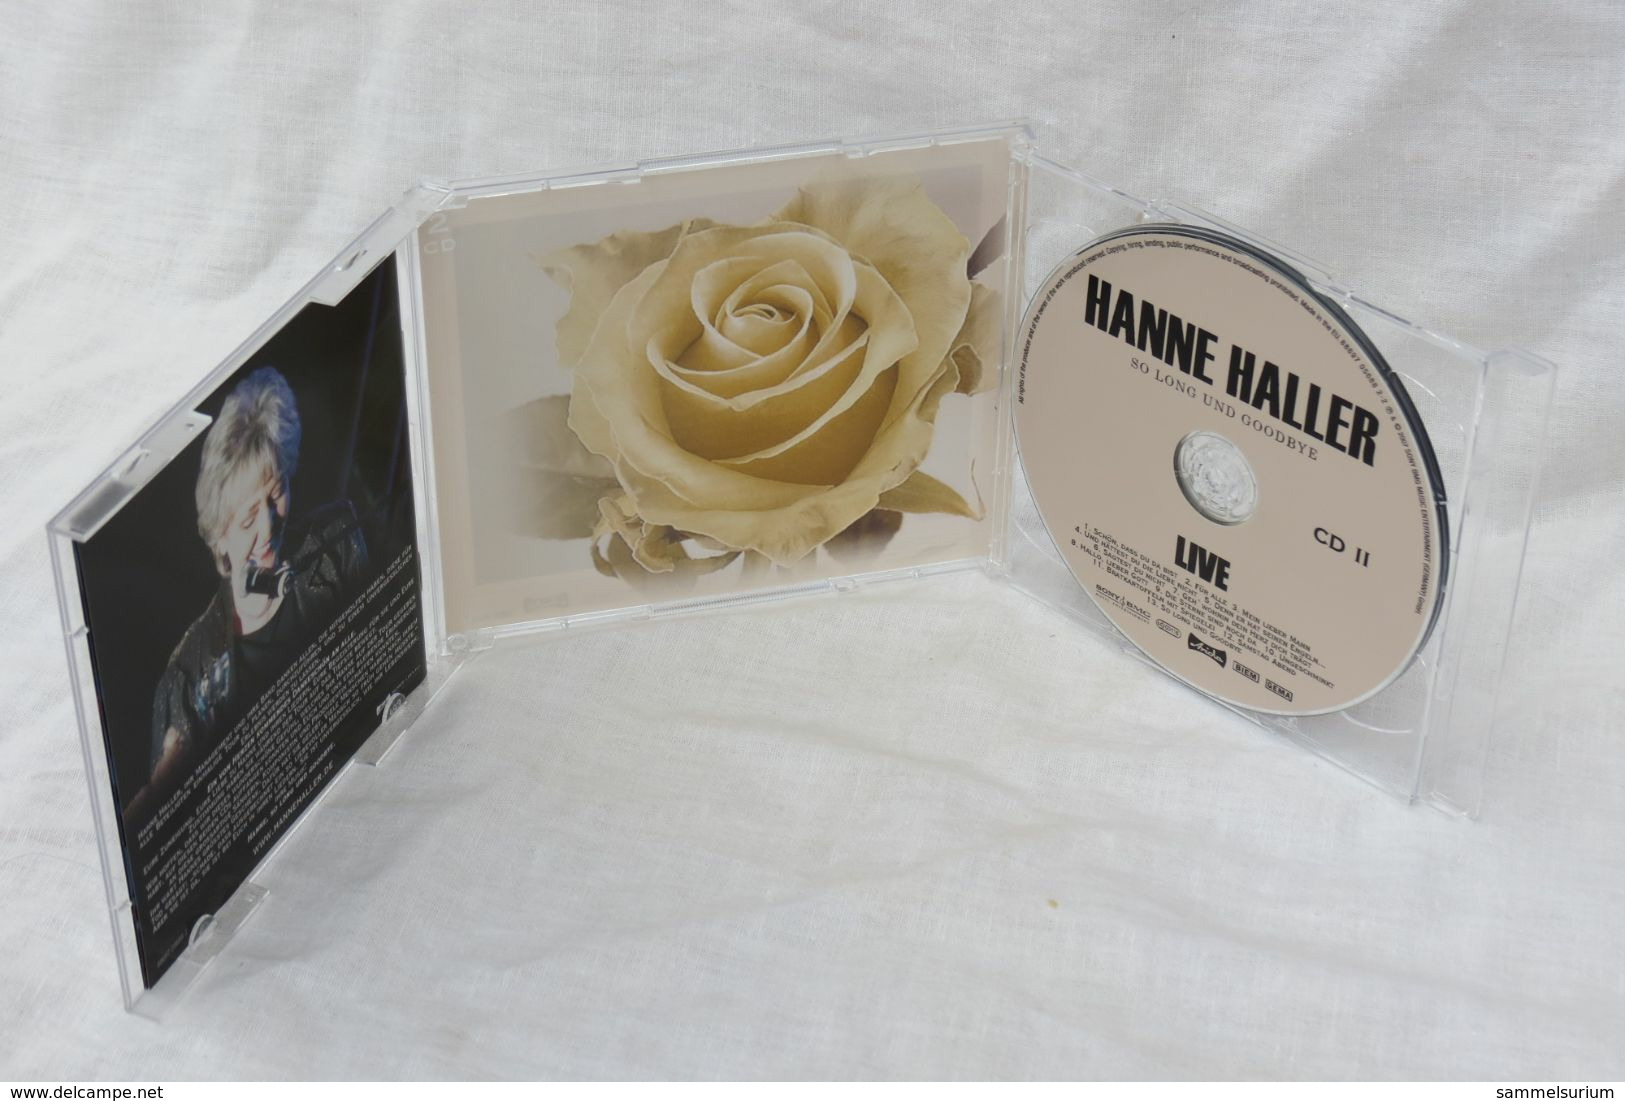 2 CDs "Hanne Haller Live" So Long Und Goodbye - Other - German Music